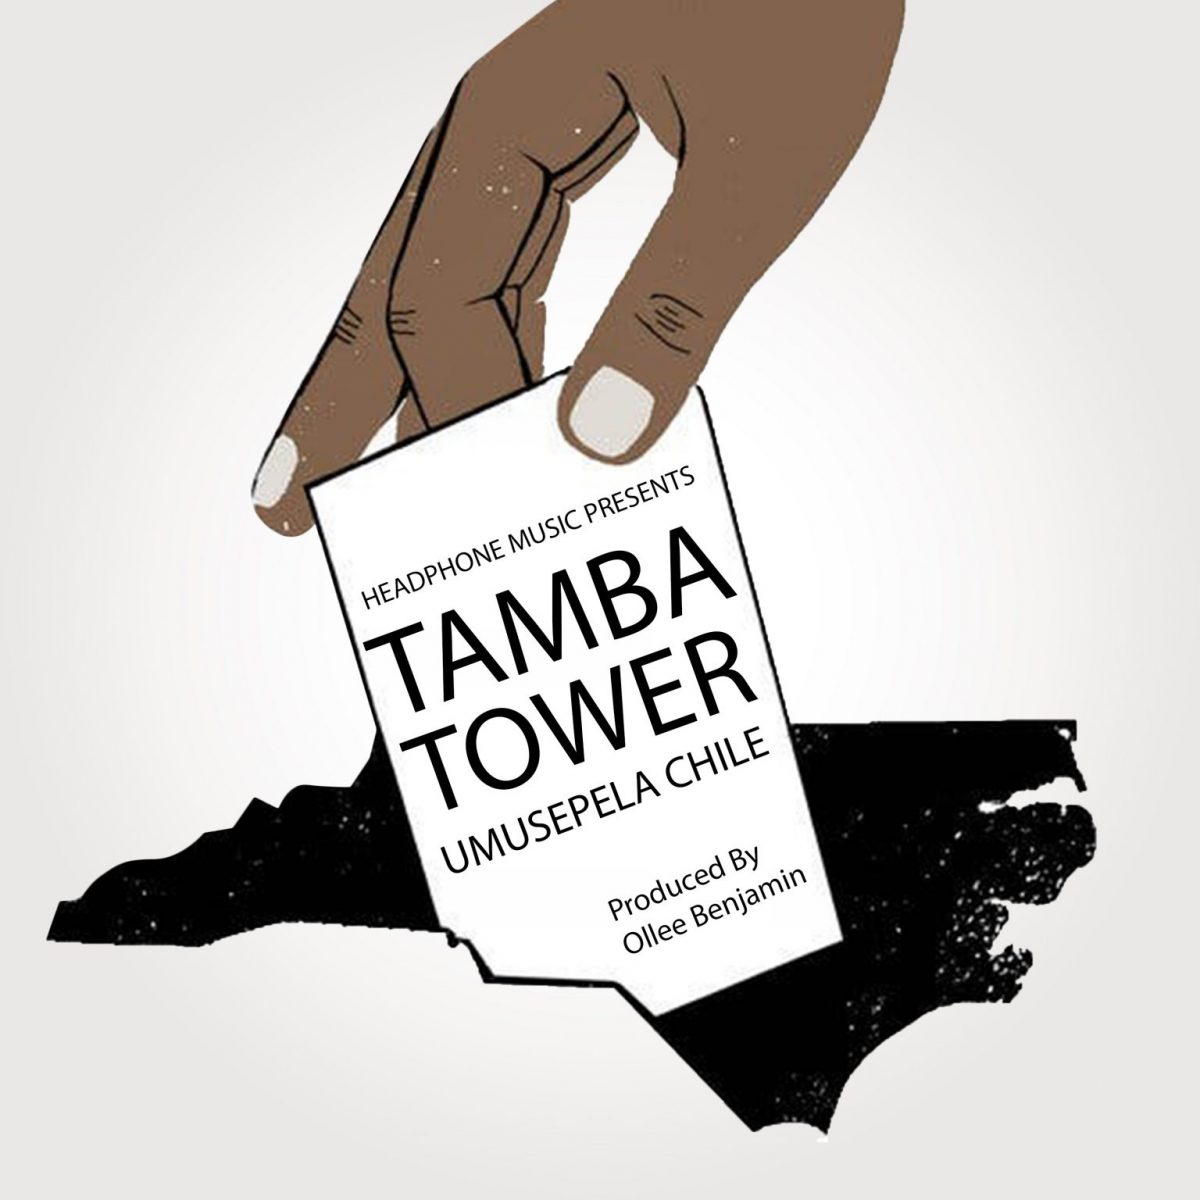 Umusepela Chile - Tamba Tower